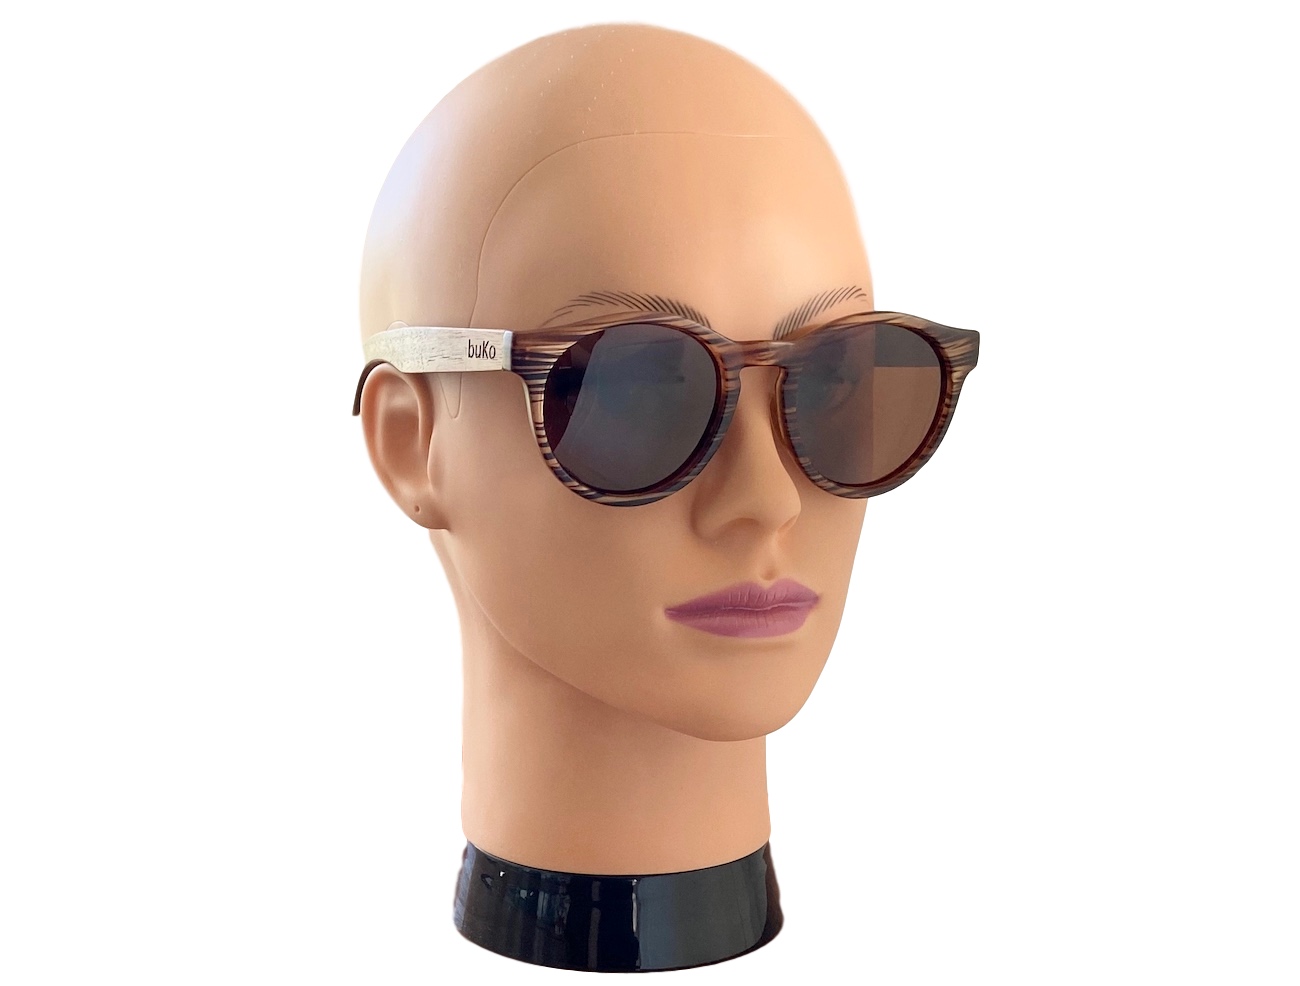 Savannah wooden sunglasses on female model